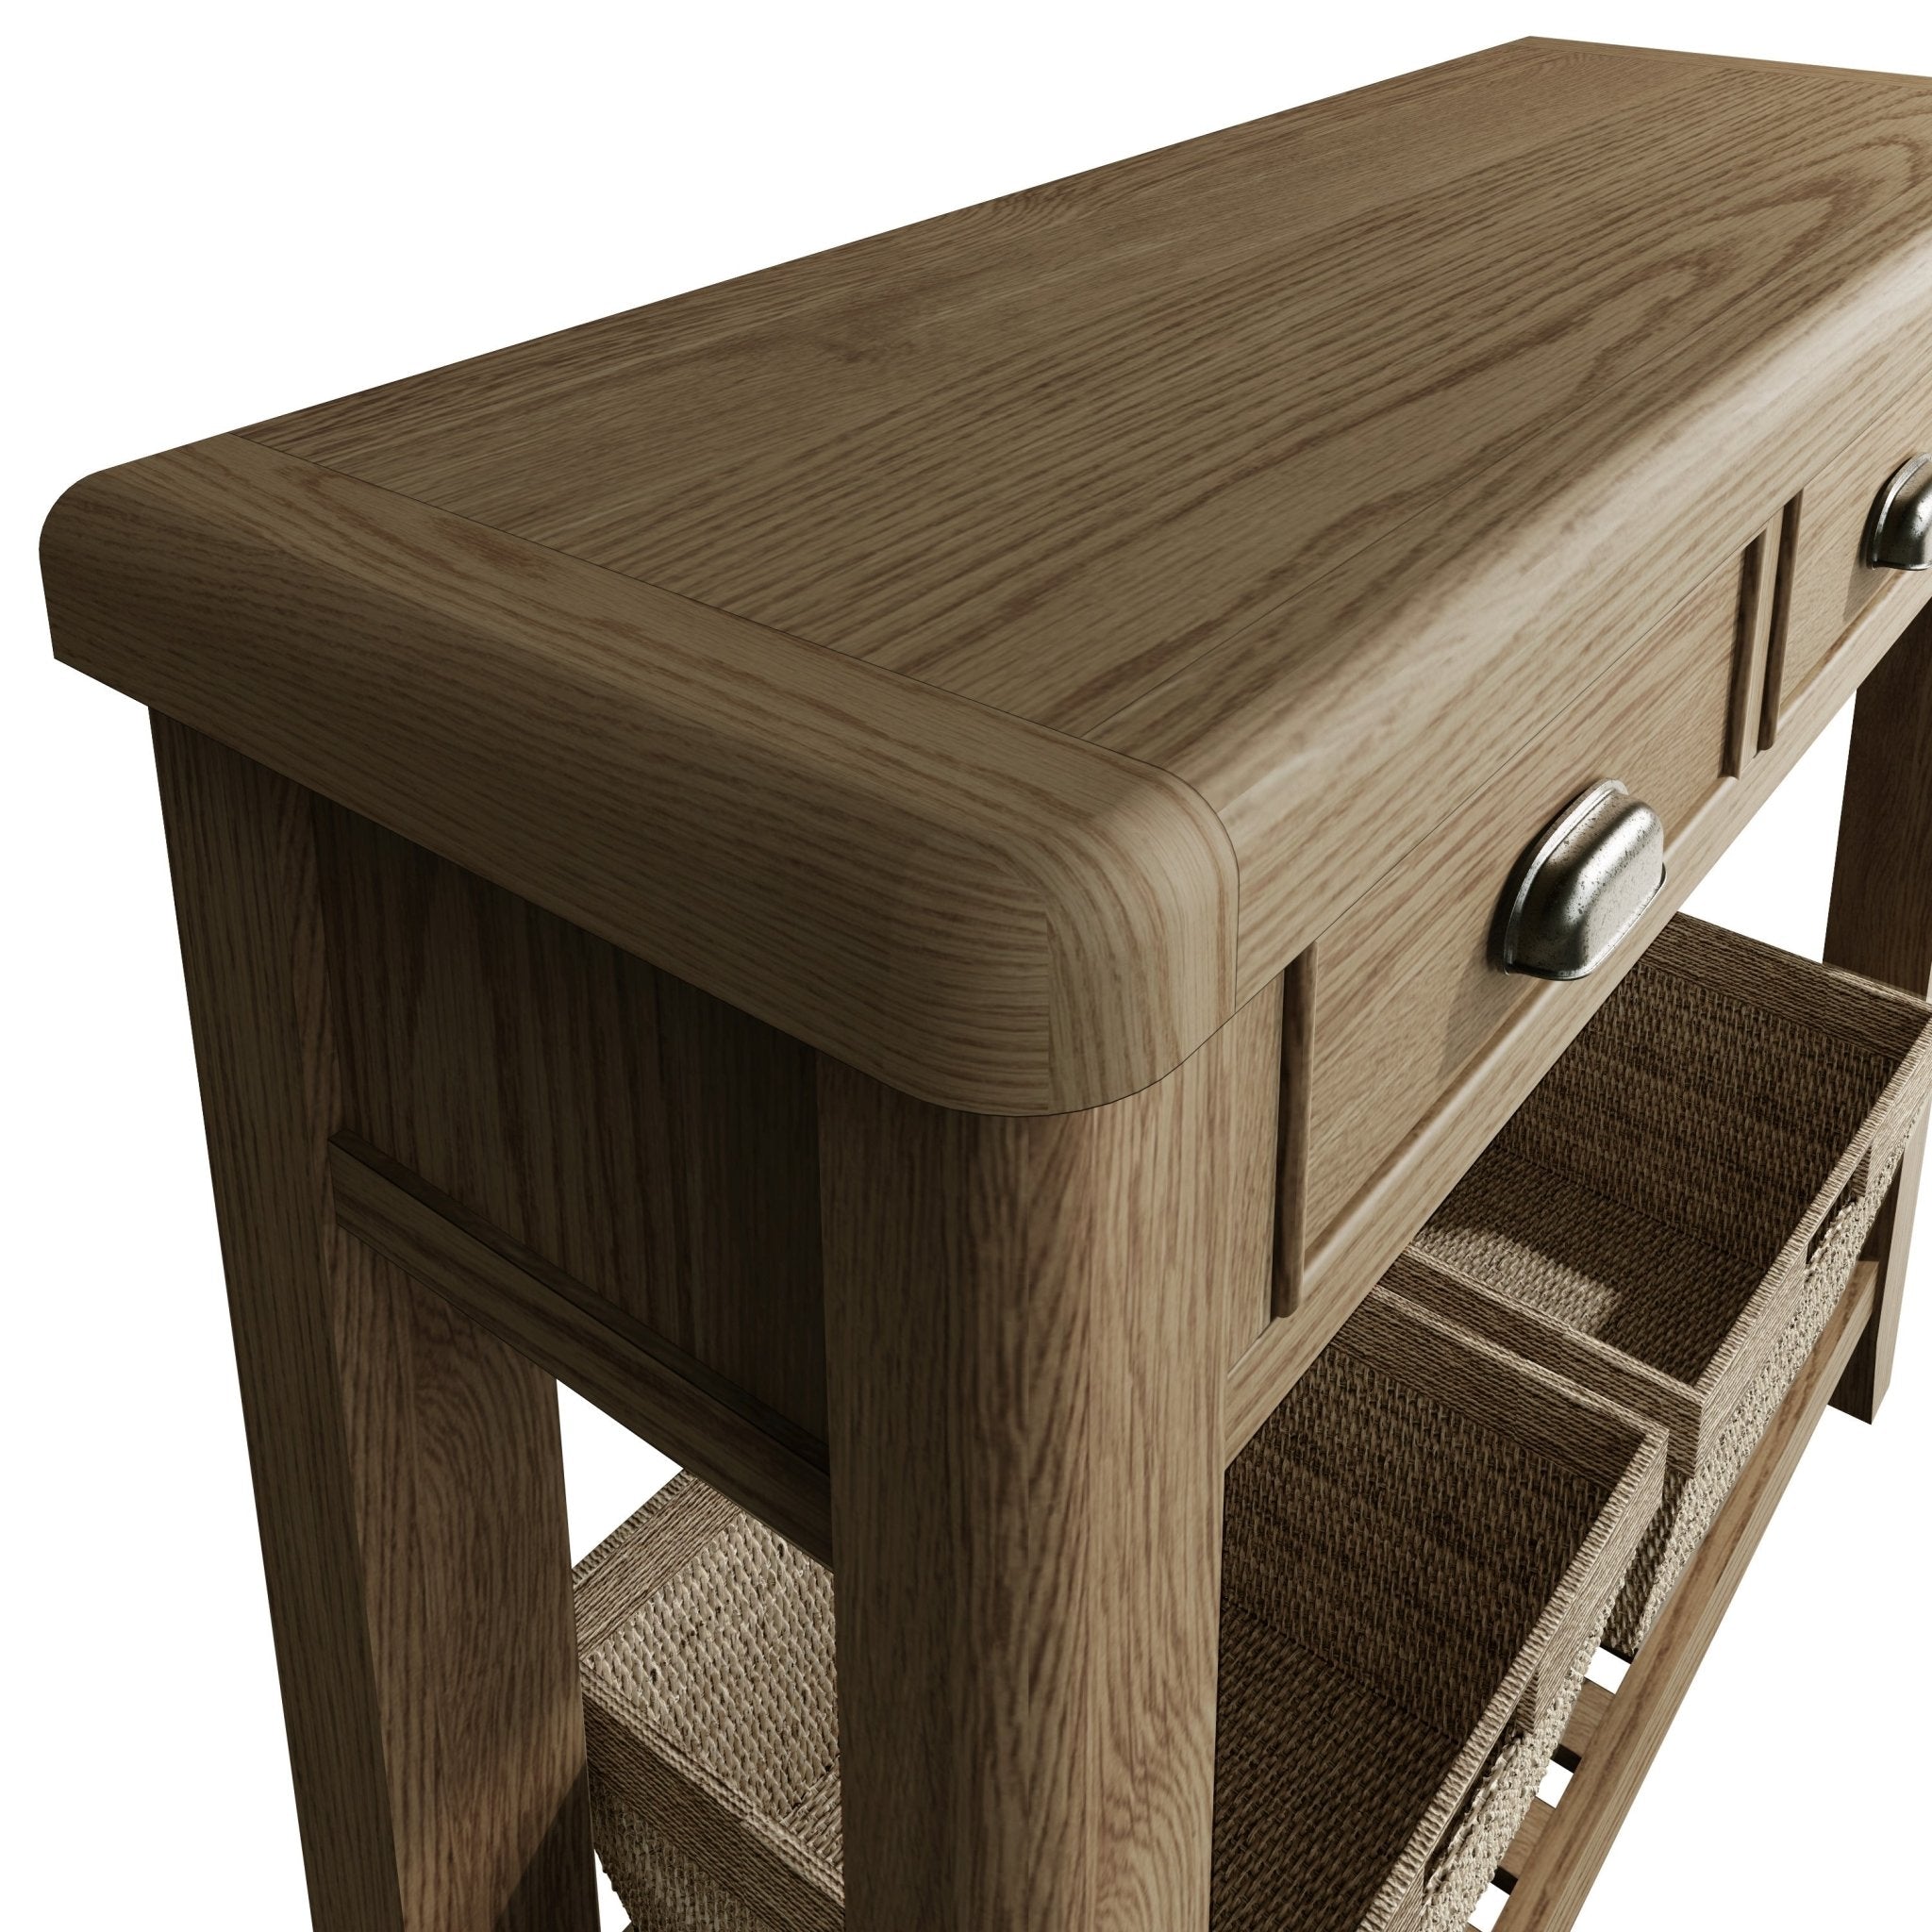 Rusper Oak Console Table with 2 Baskets - Duck Barn Interiors